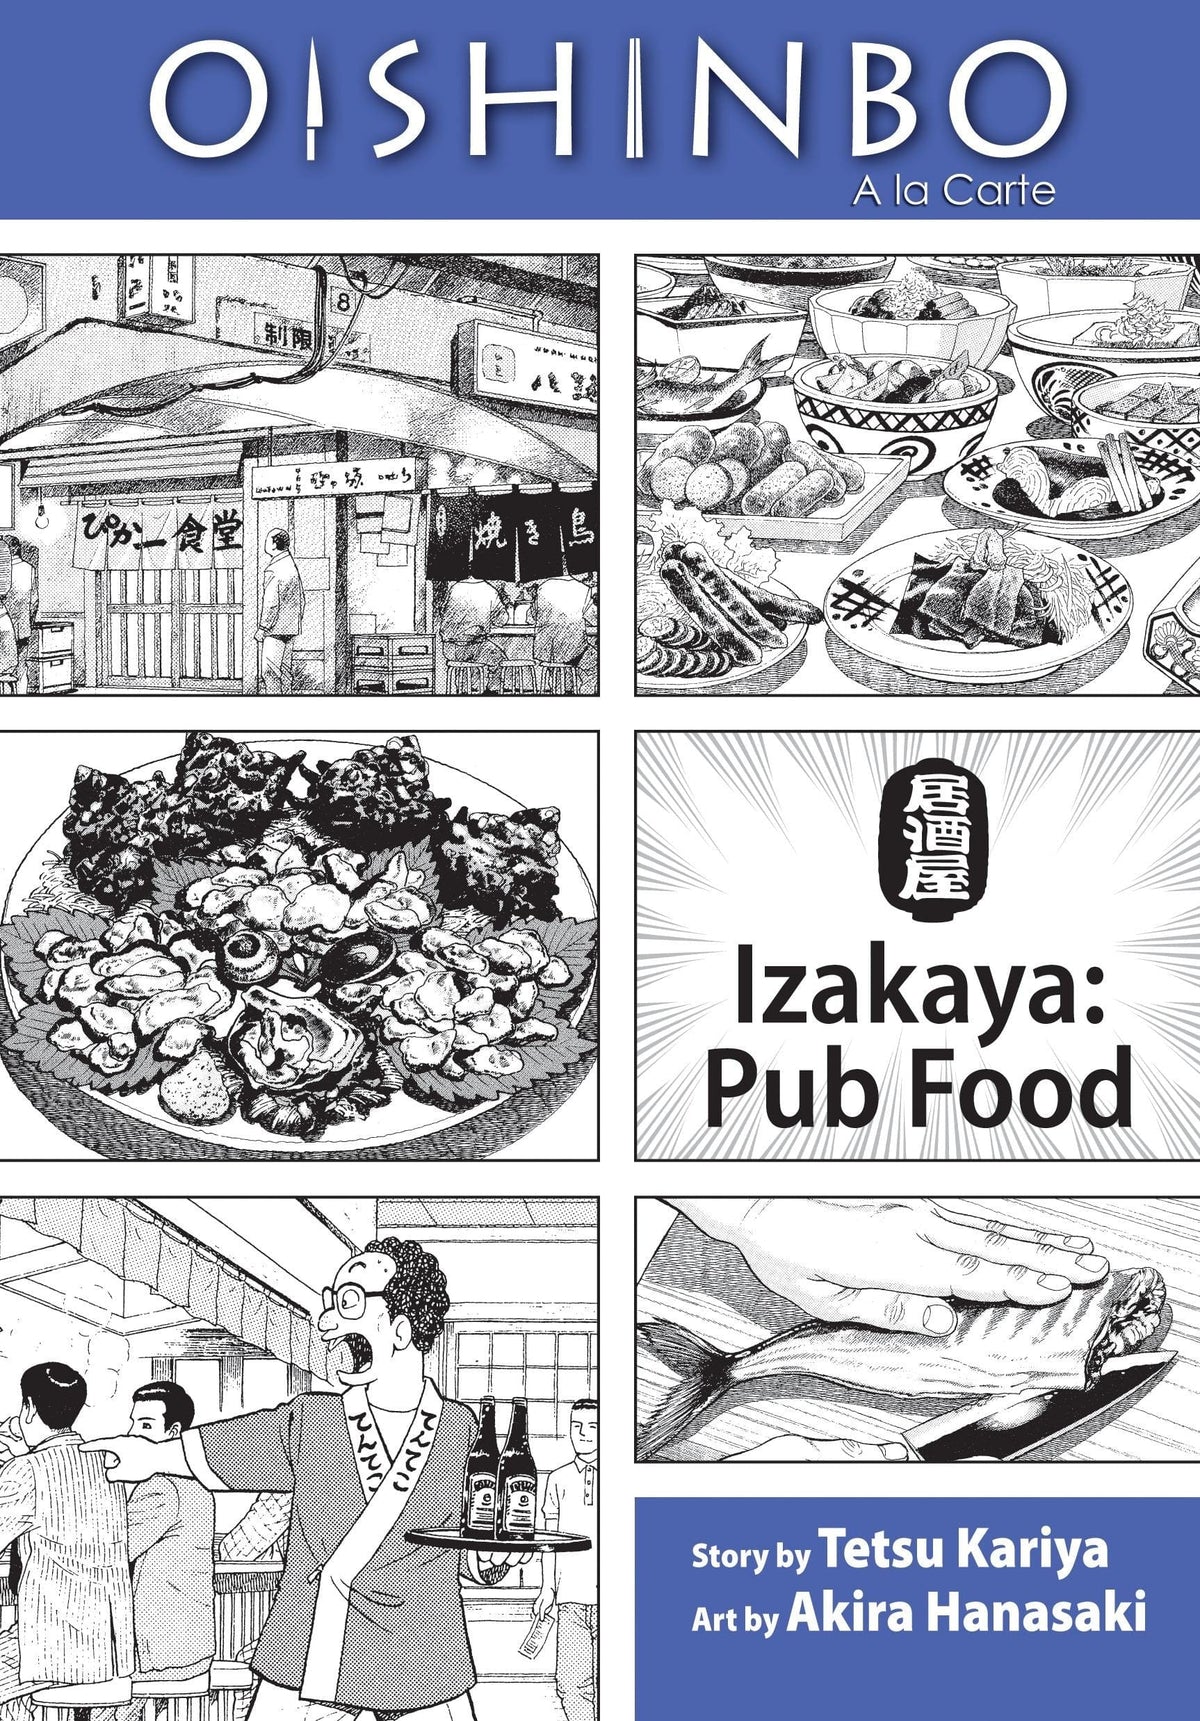 Oishinbo: A la Carte Vol. 7 - Izakaya Pub Food - Third Eye